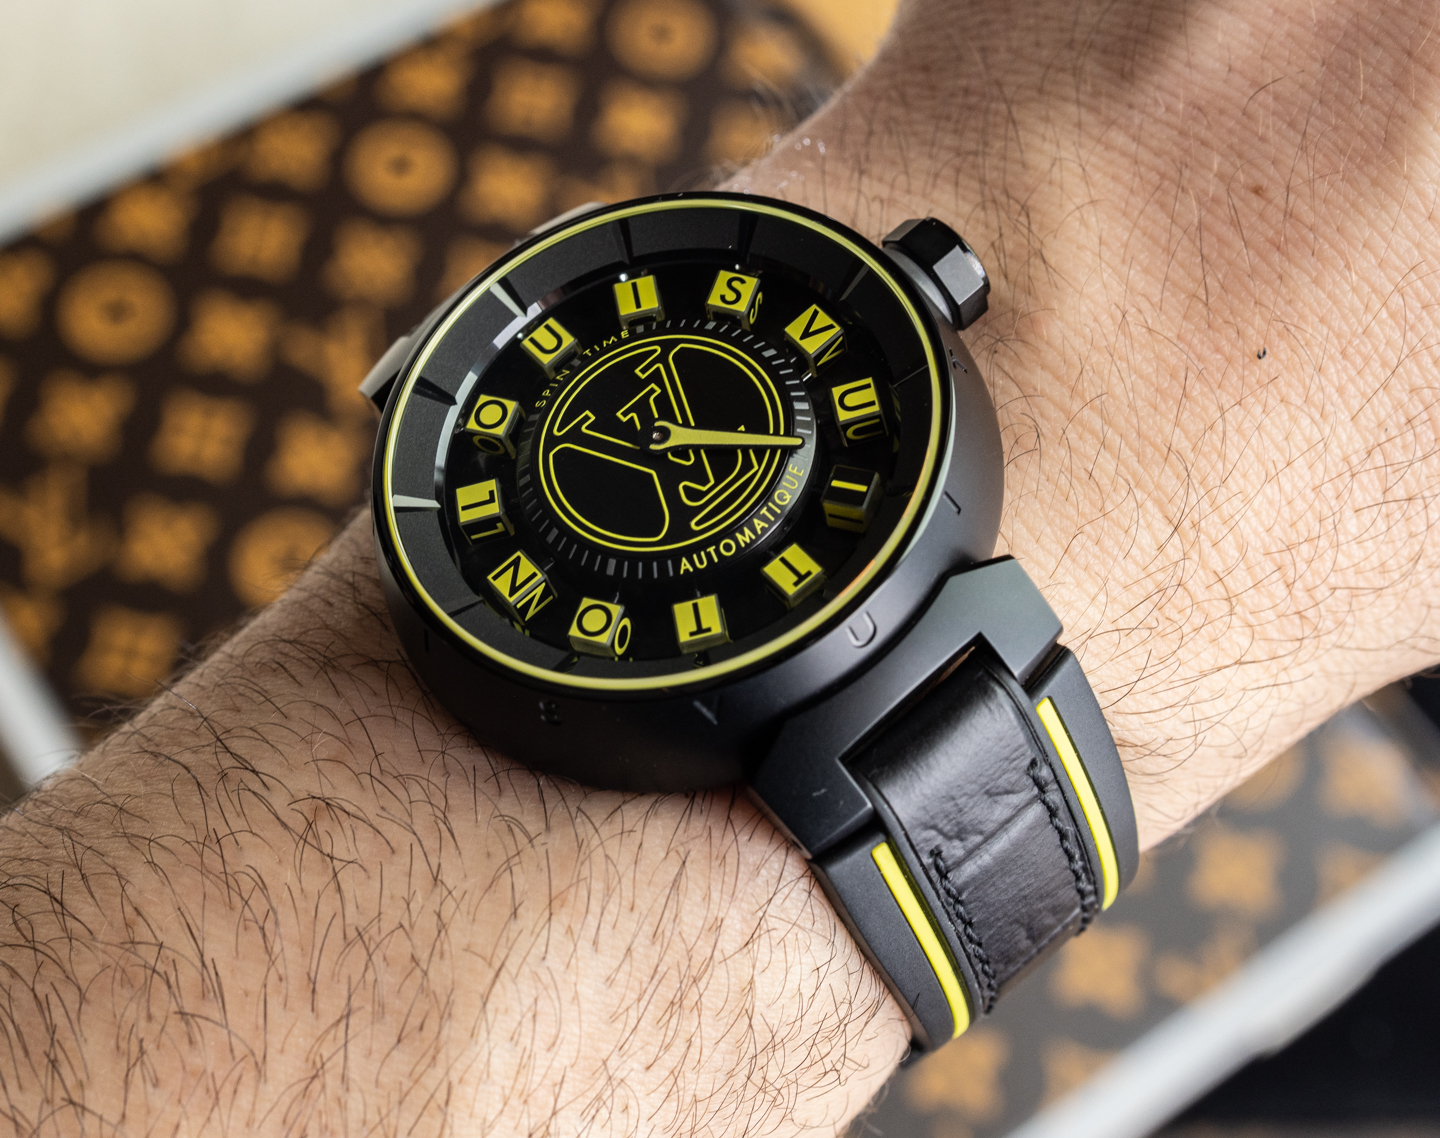 Louis Vuitton Wristwatch Bands for sale